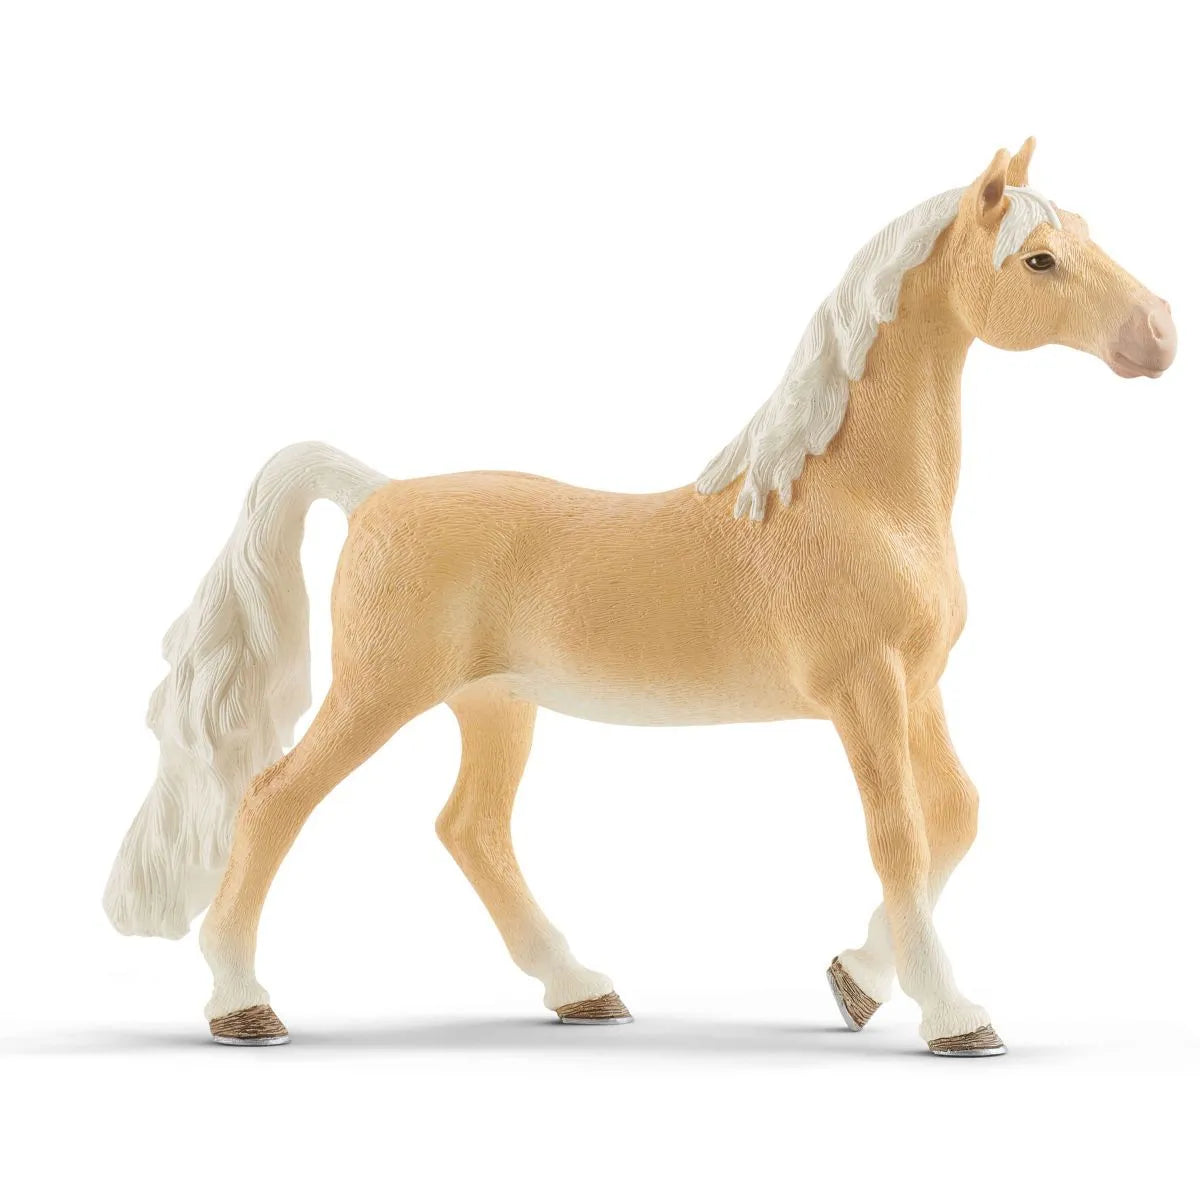 Schleich 13912 American Saddlebred mare - Hobbytech Toys